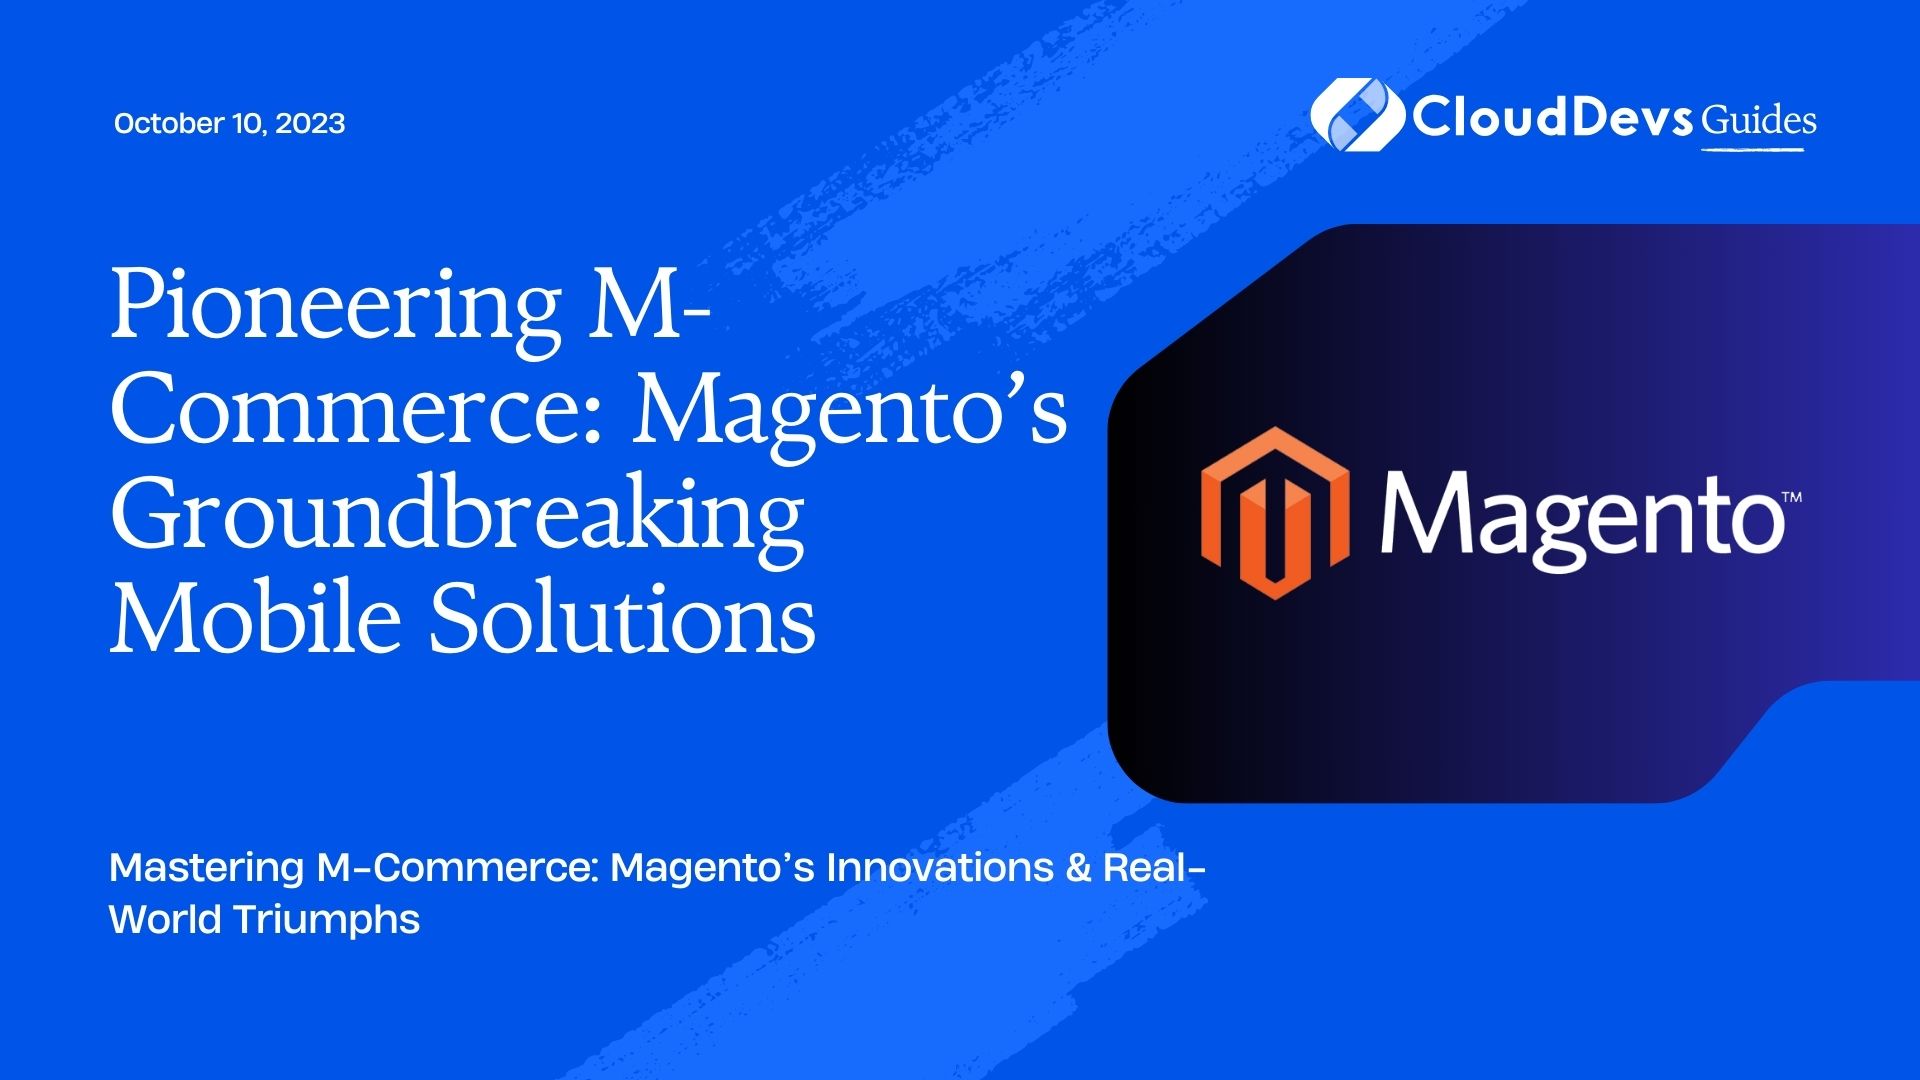 Pioneering M-Commerce: Magento’s Groundbreaking Mobile Solutions